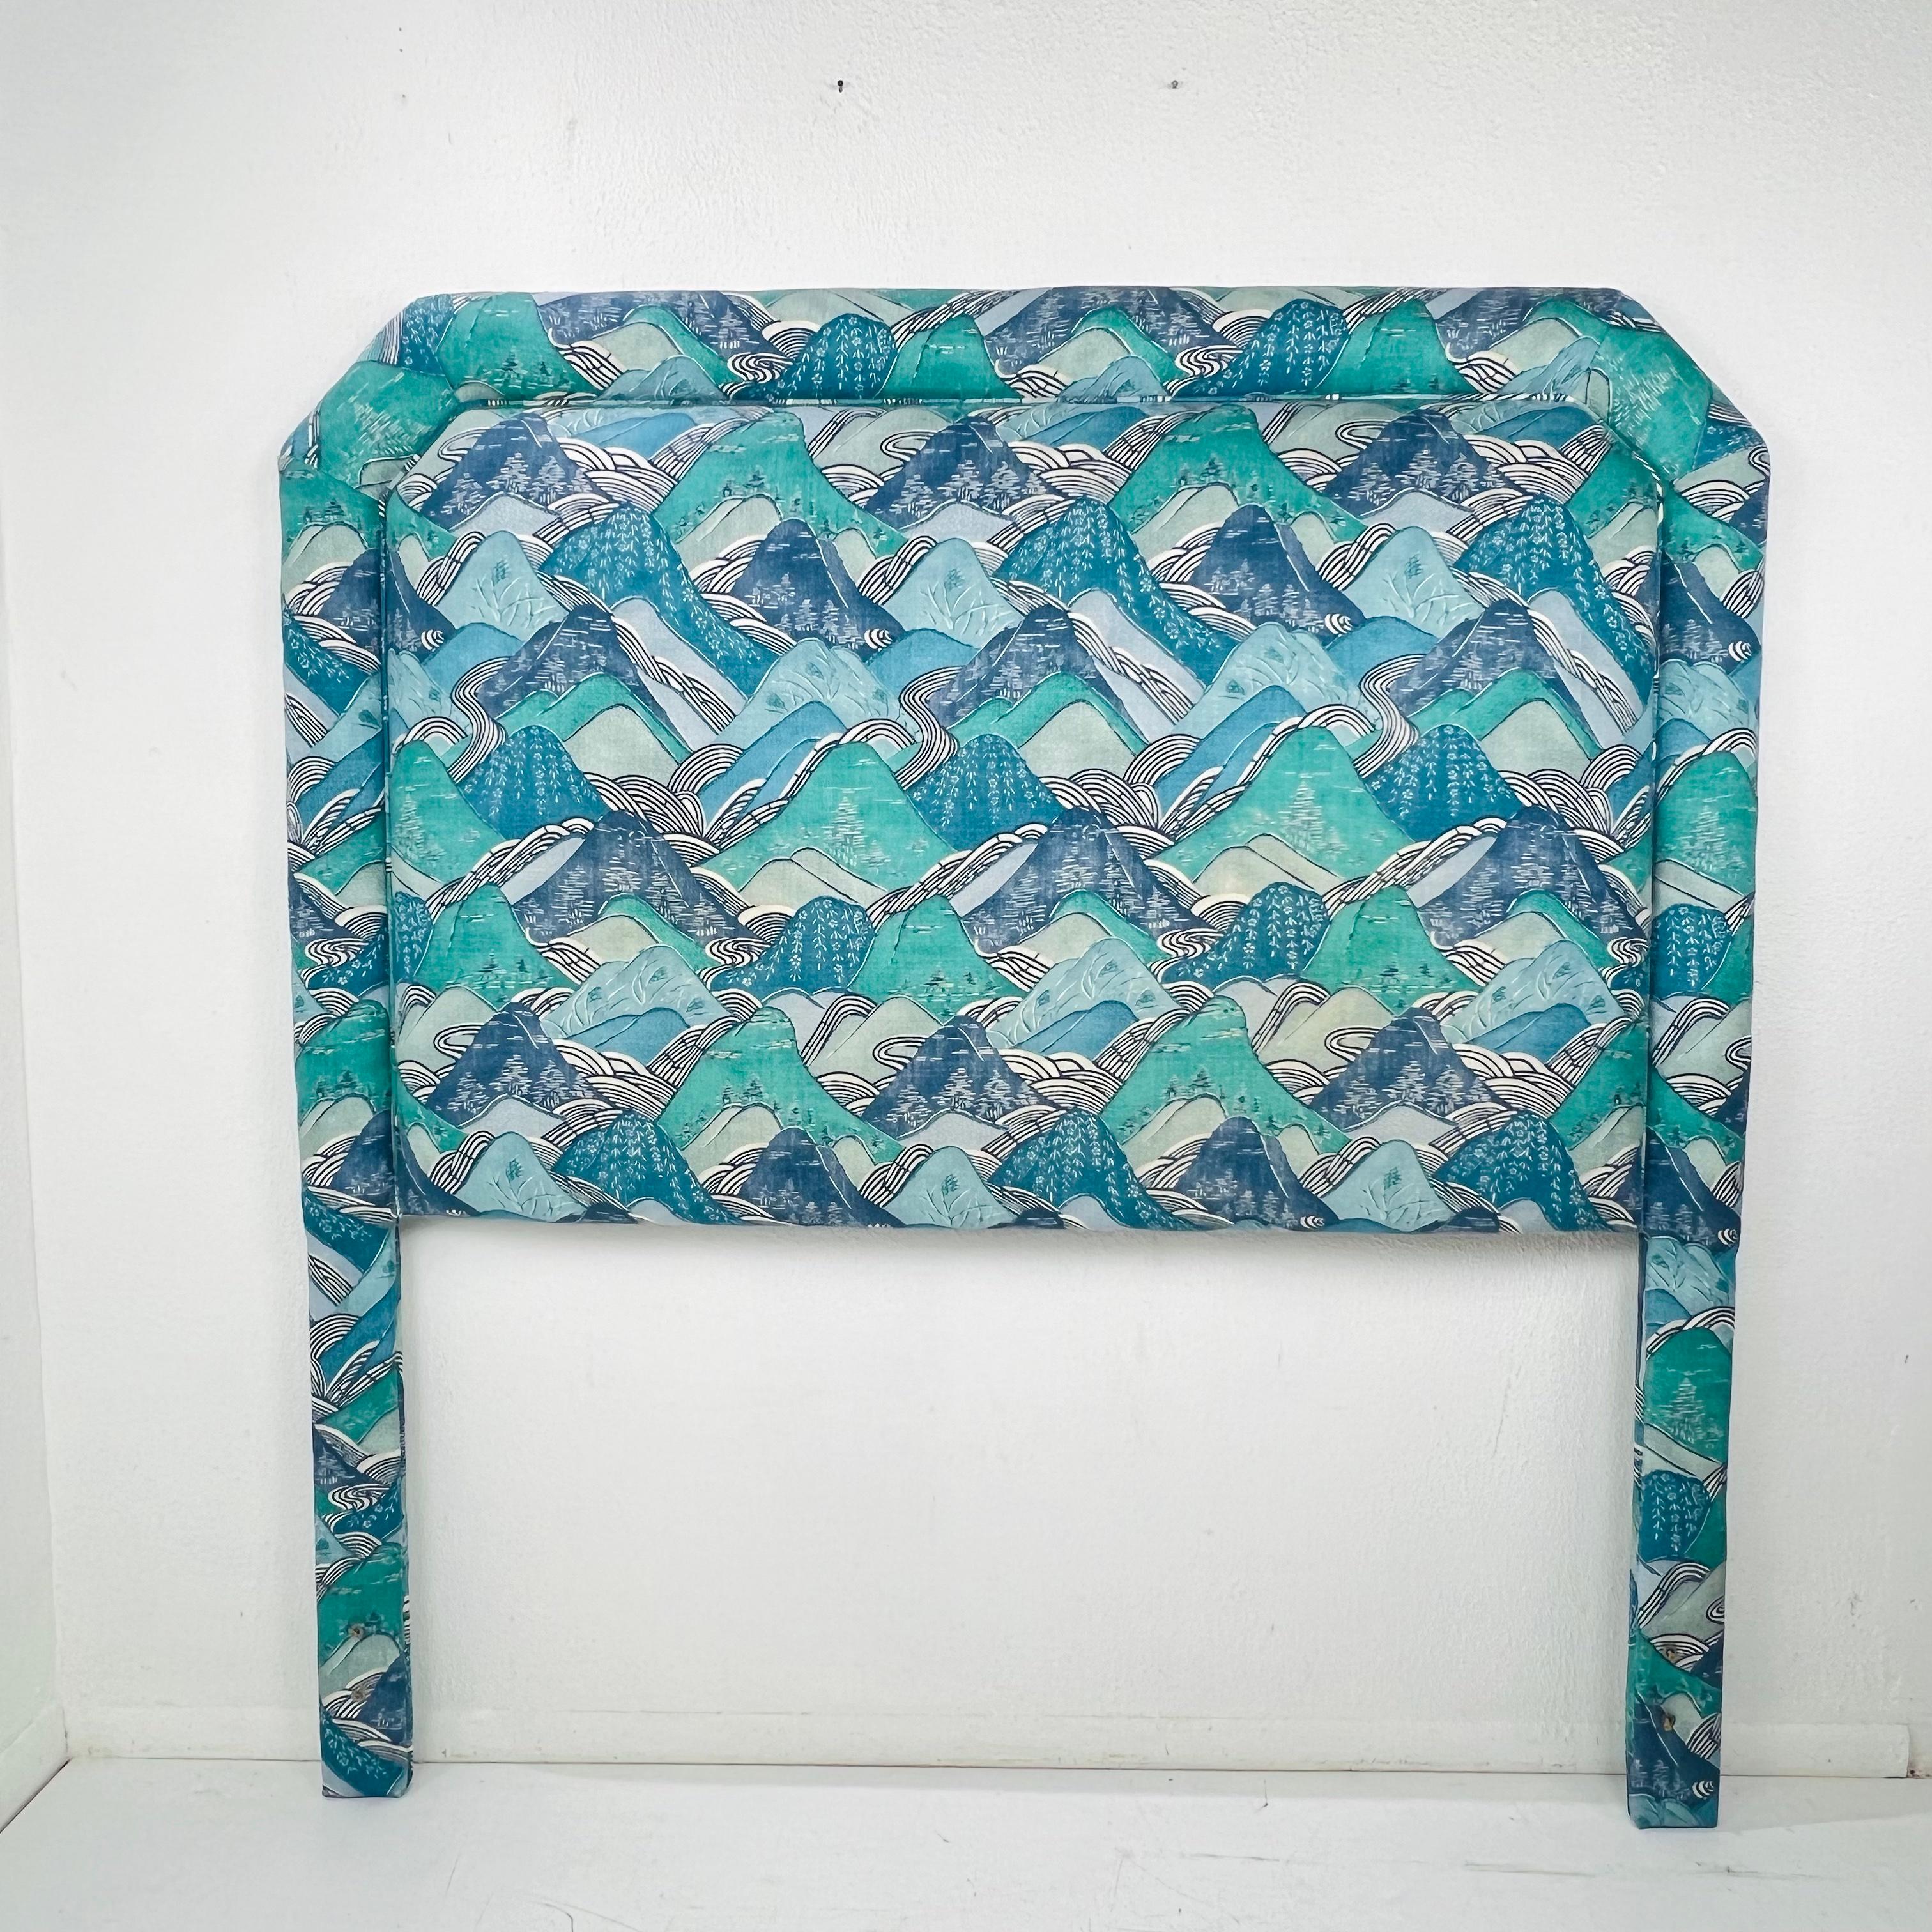 Queen Headboard Upholstered in Teal/Blue Kelly Wearstler Fabric For Sale 2